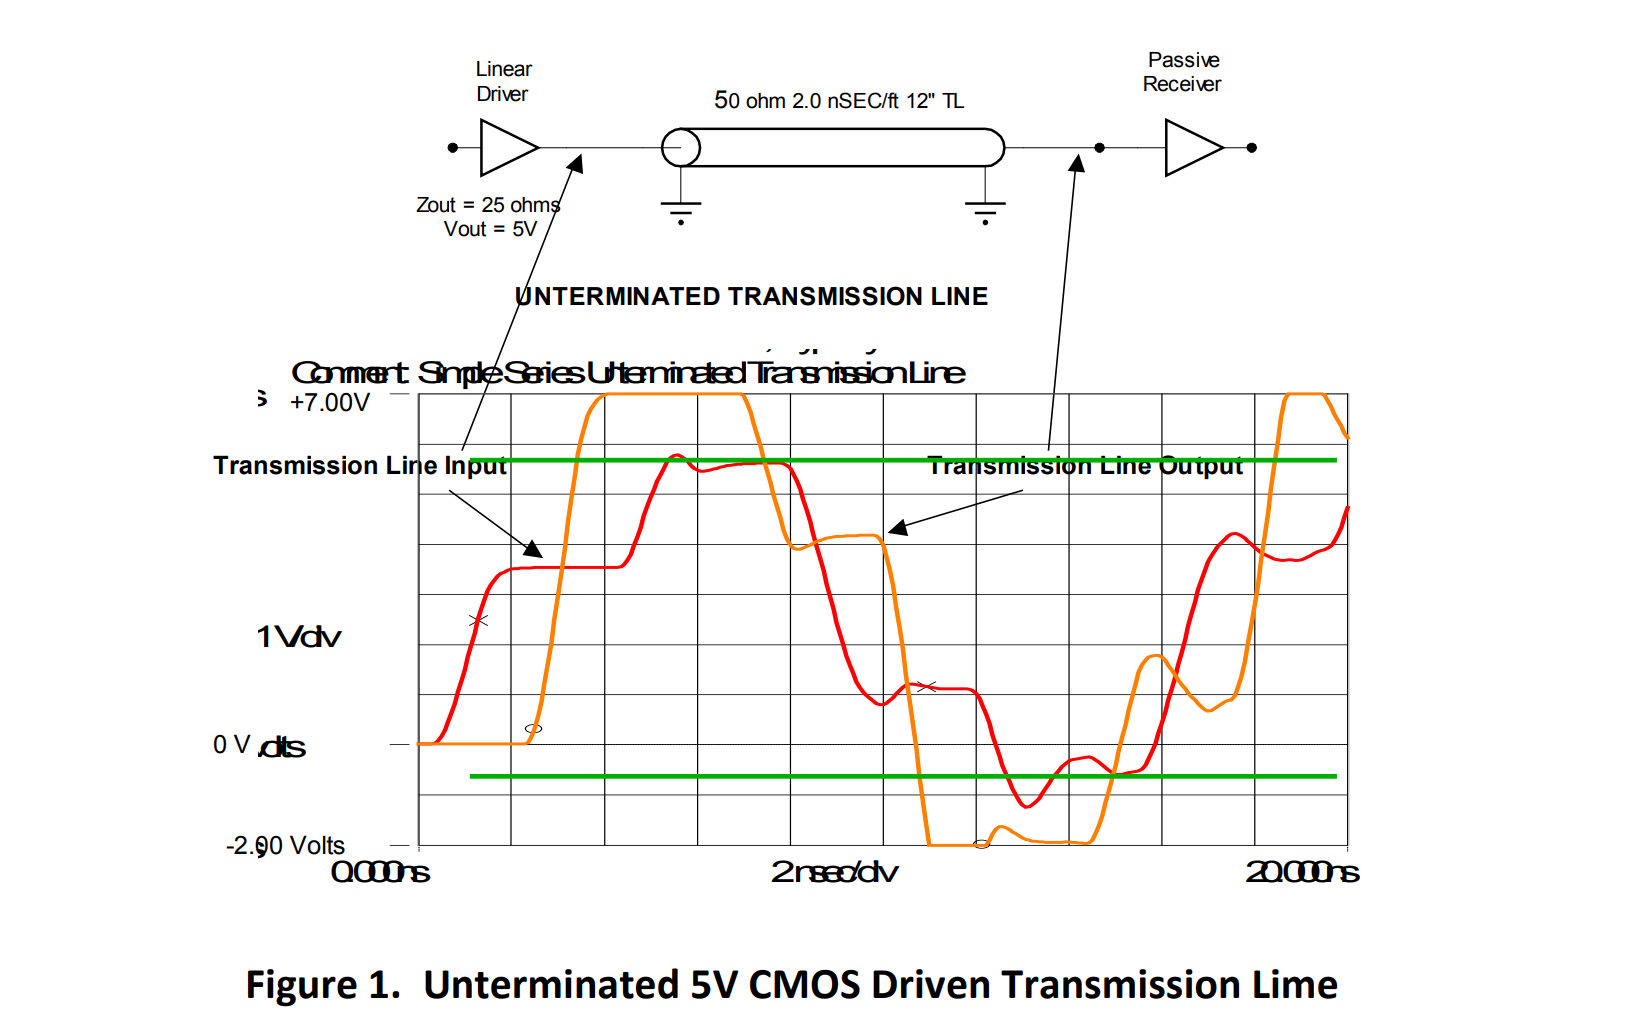 Unterminated 5V CMOS Driven Transmission Line